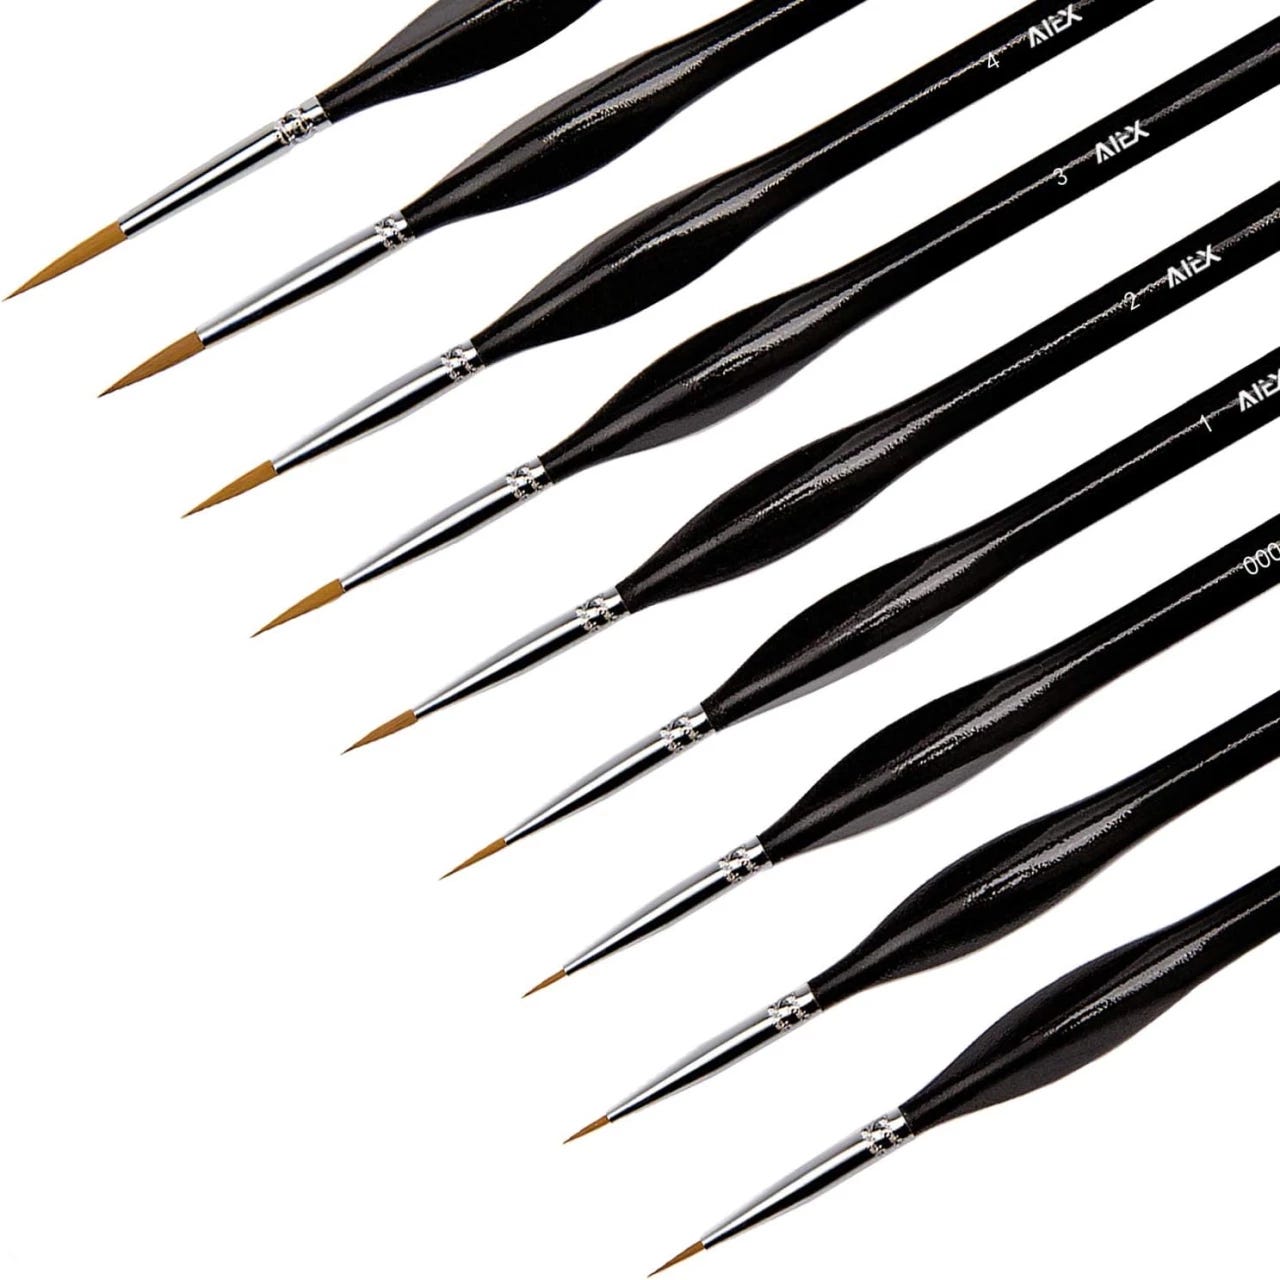 Acrylic Paint Brush Set, 6 Packs / 60 pcs Nylon Hair Brushes for